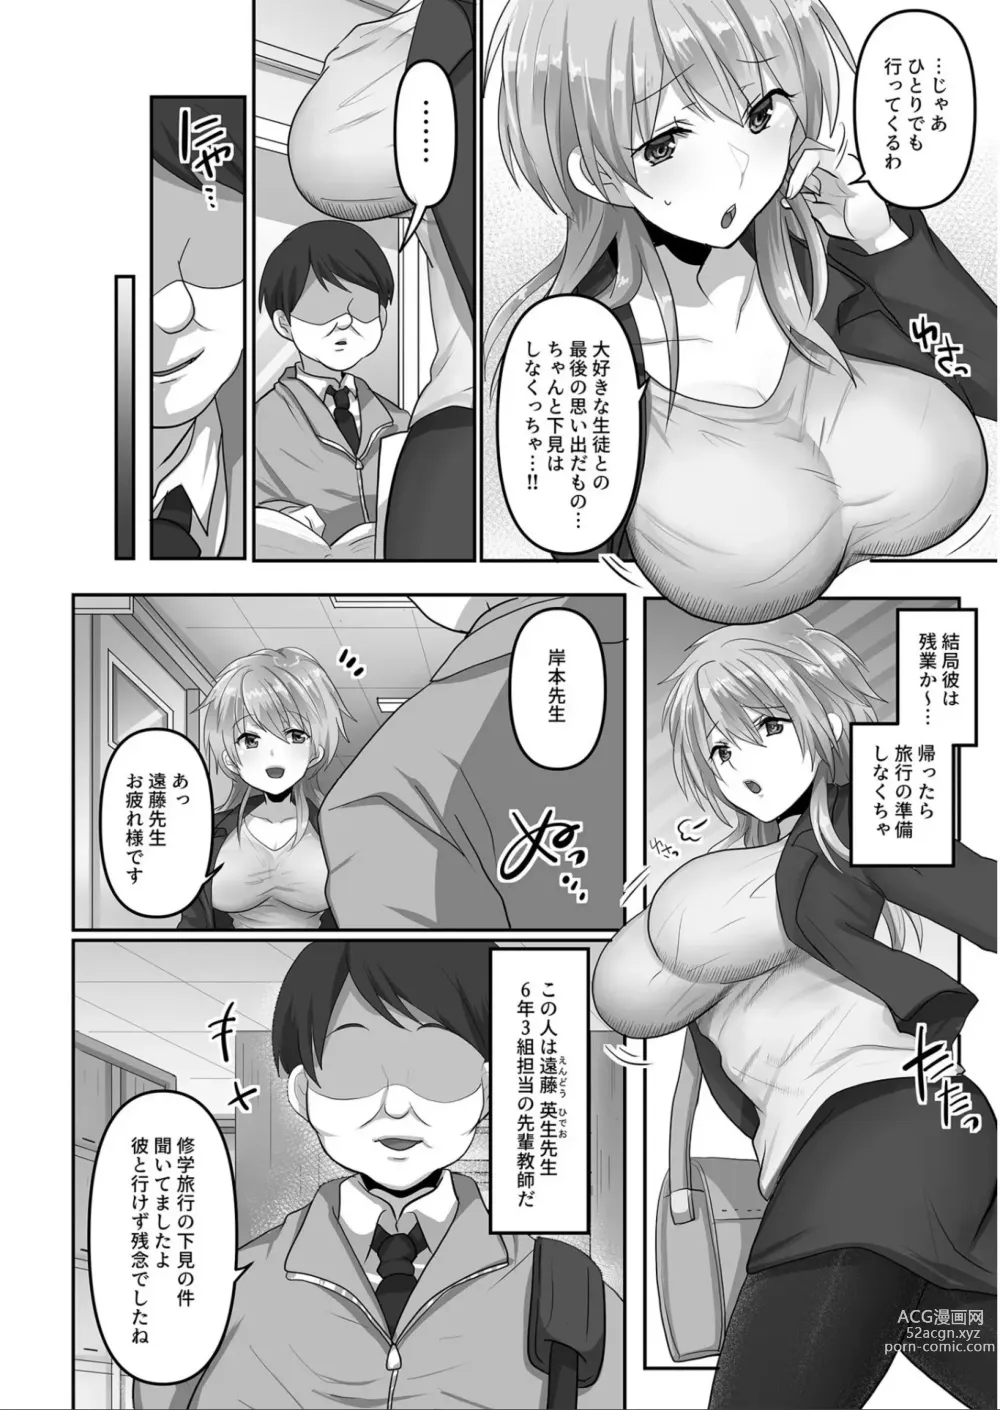 Page 5 of manga Kegasareta Watashi...